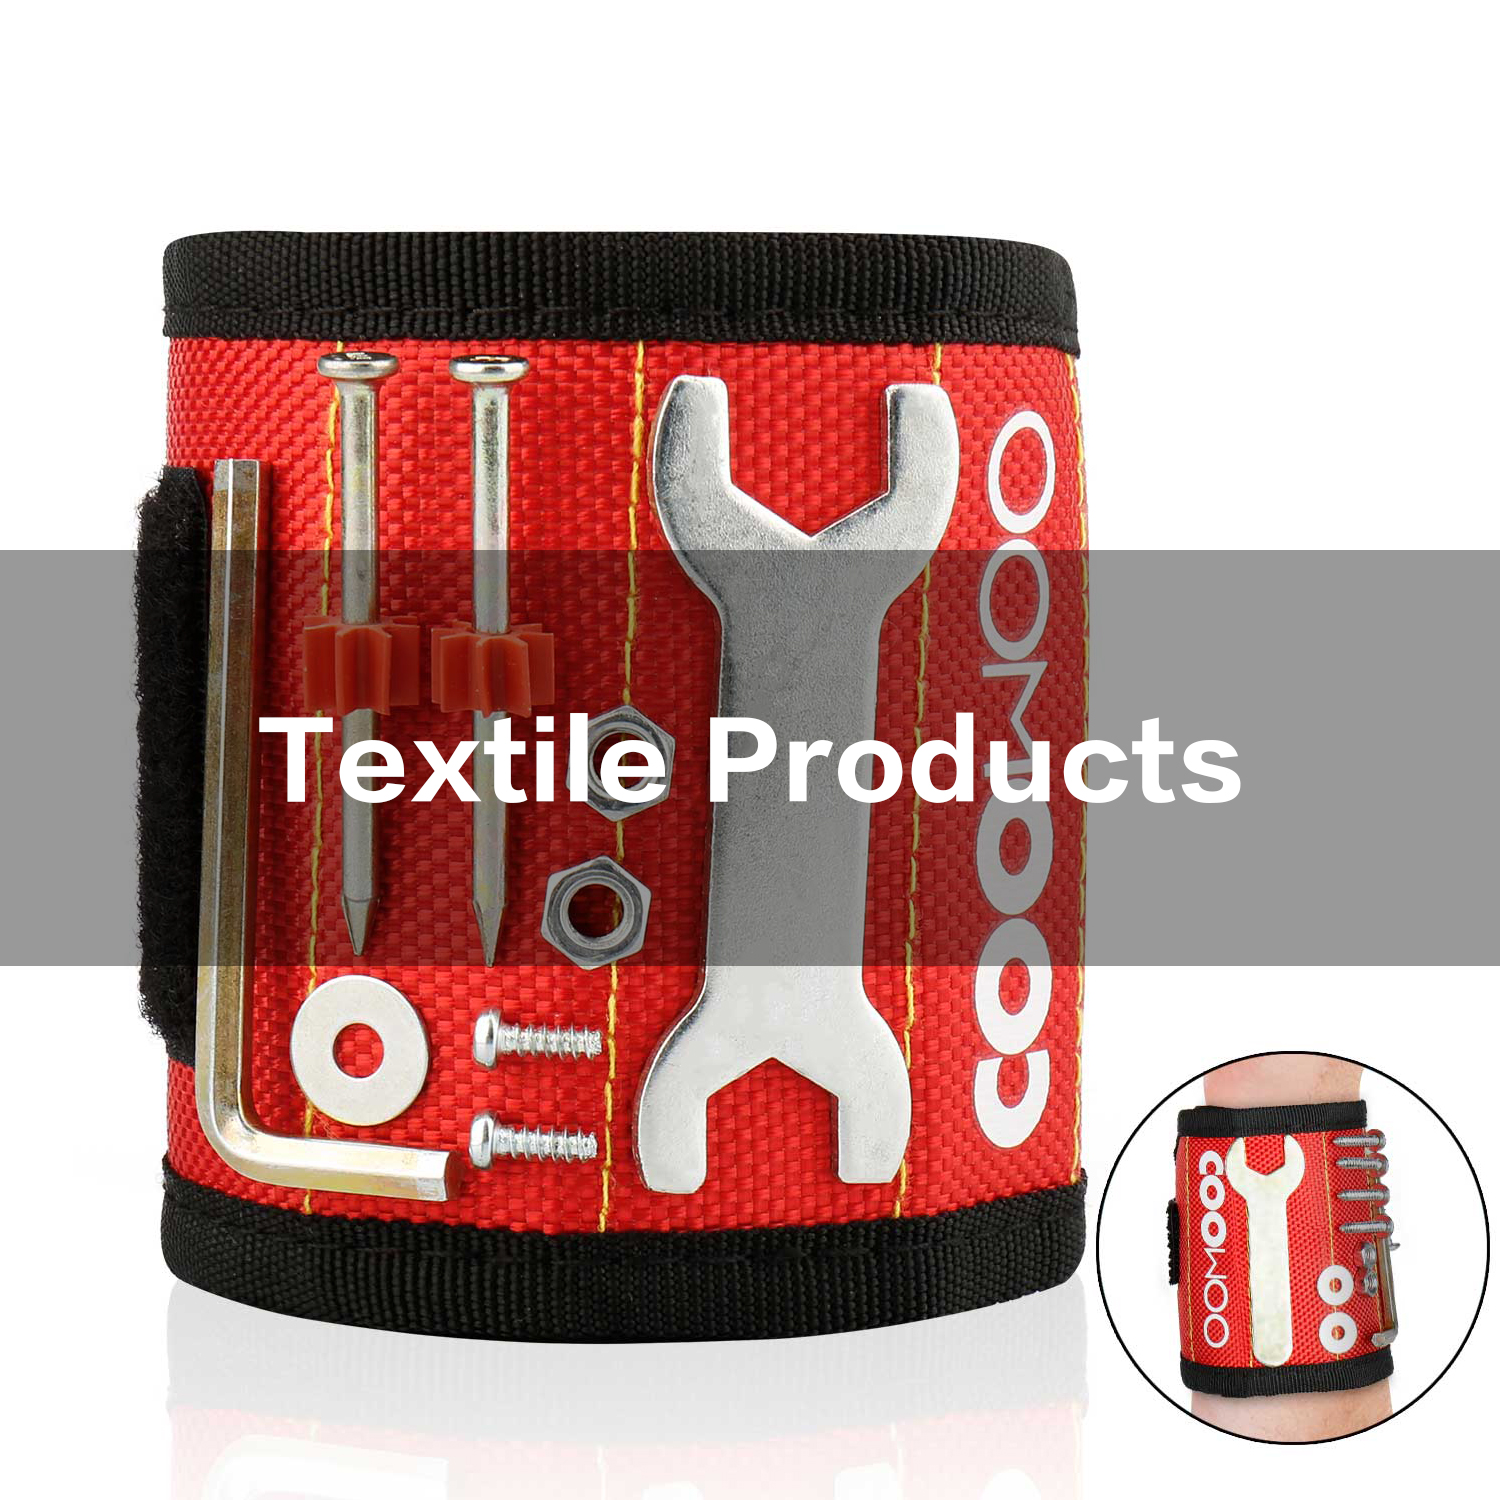 Produits Textiles